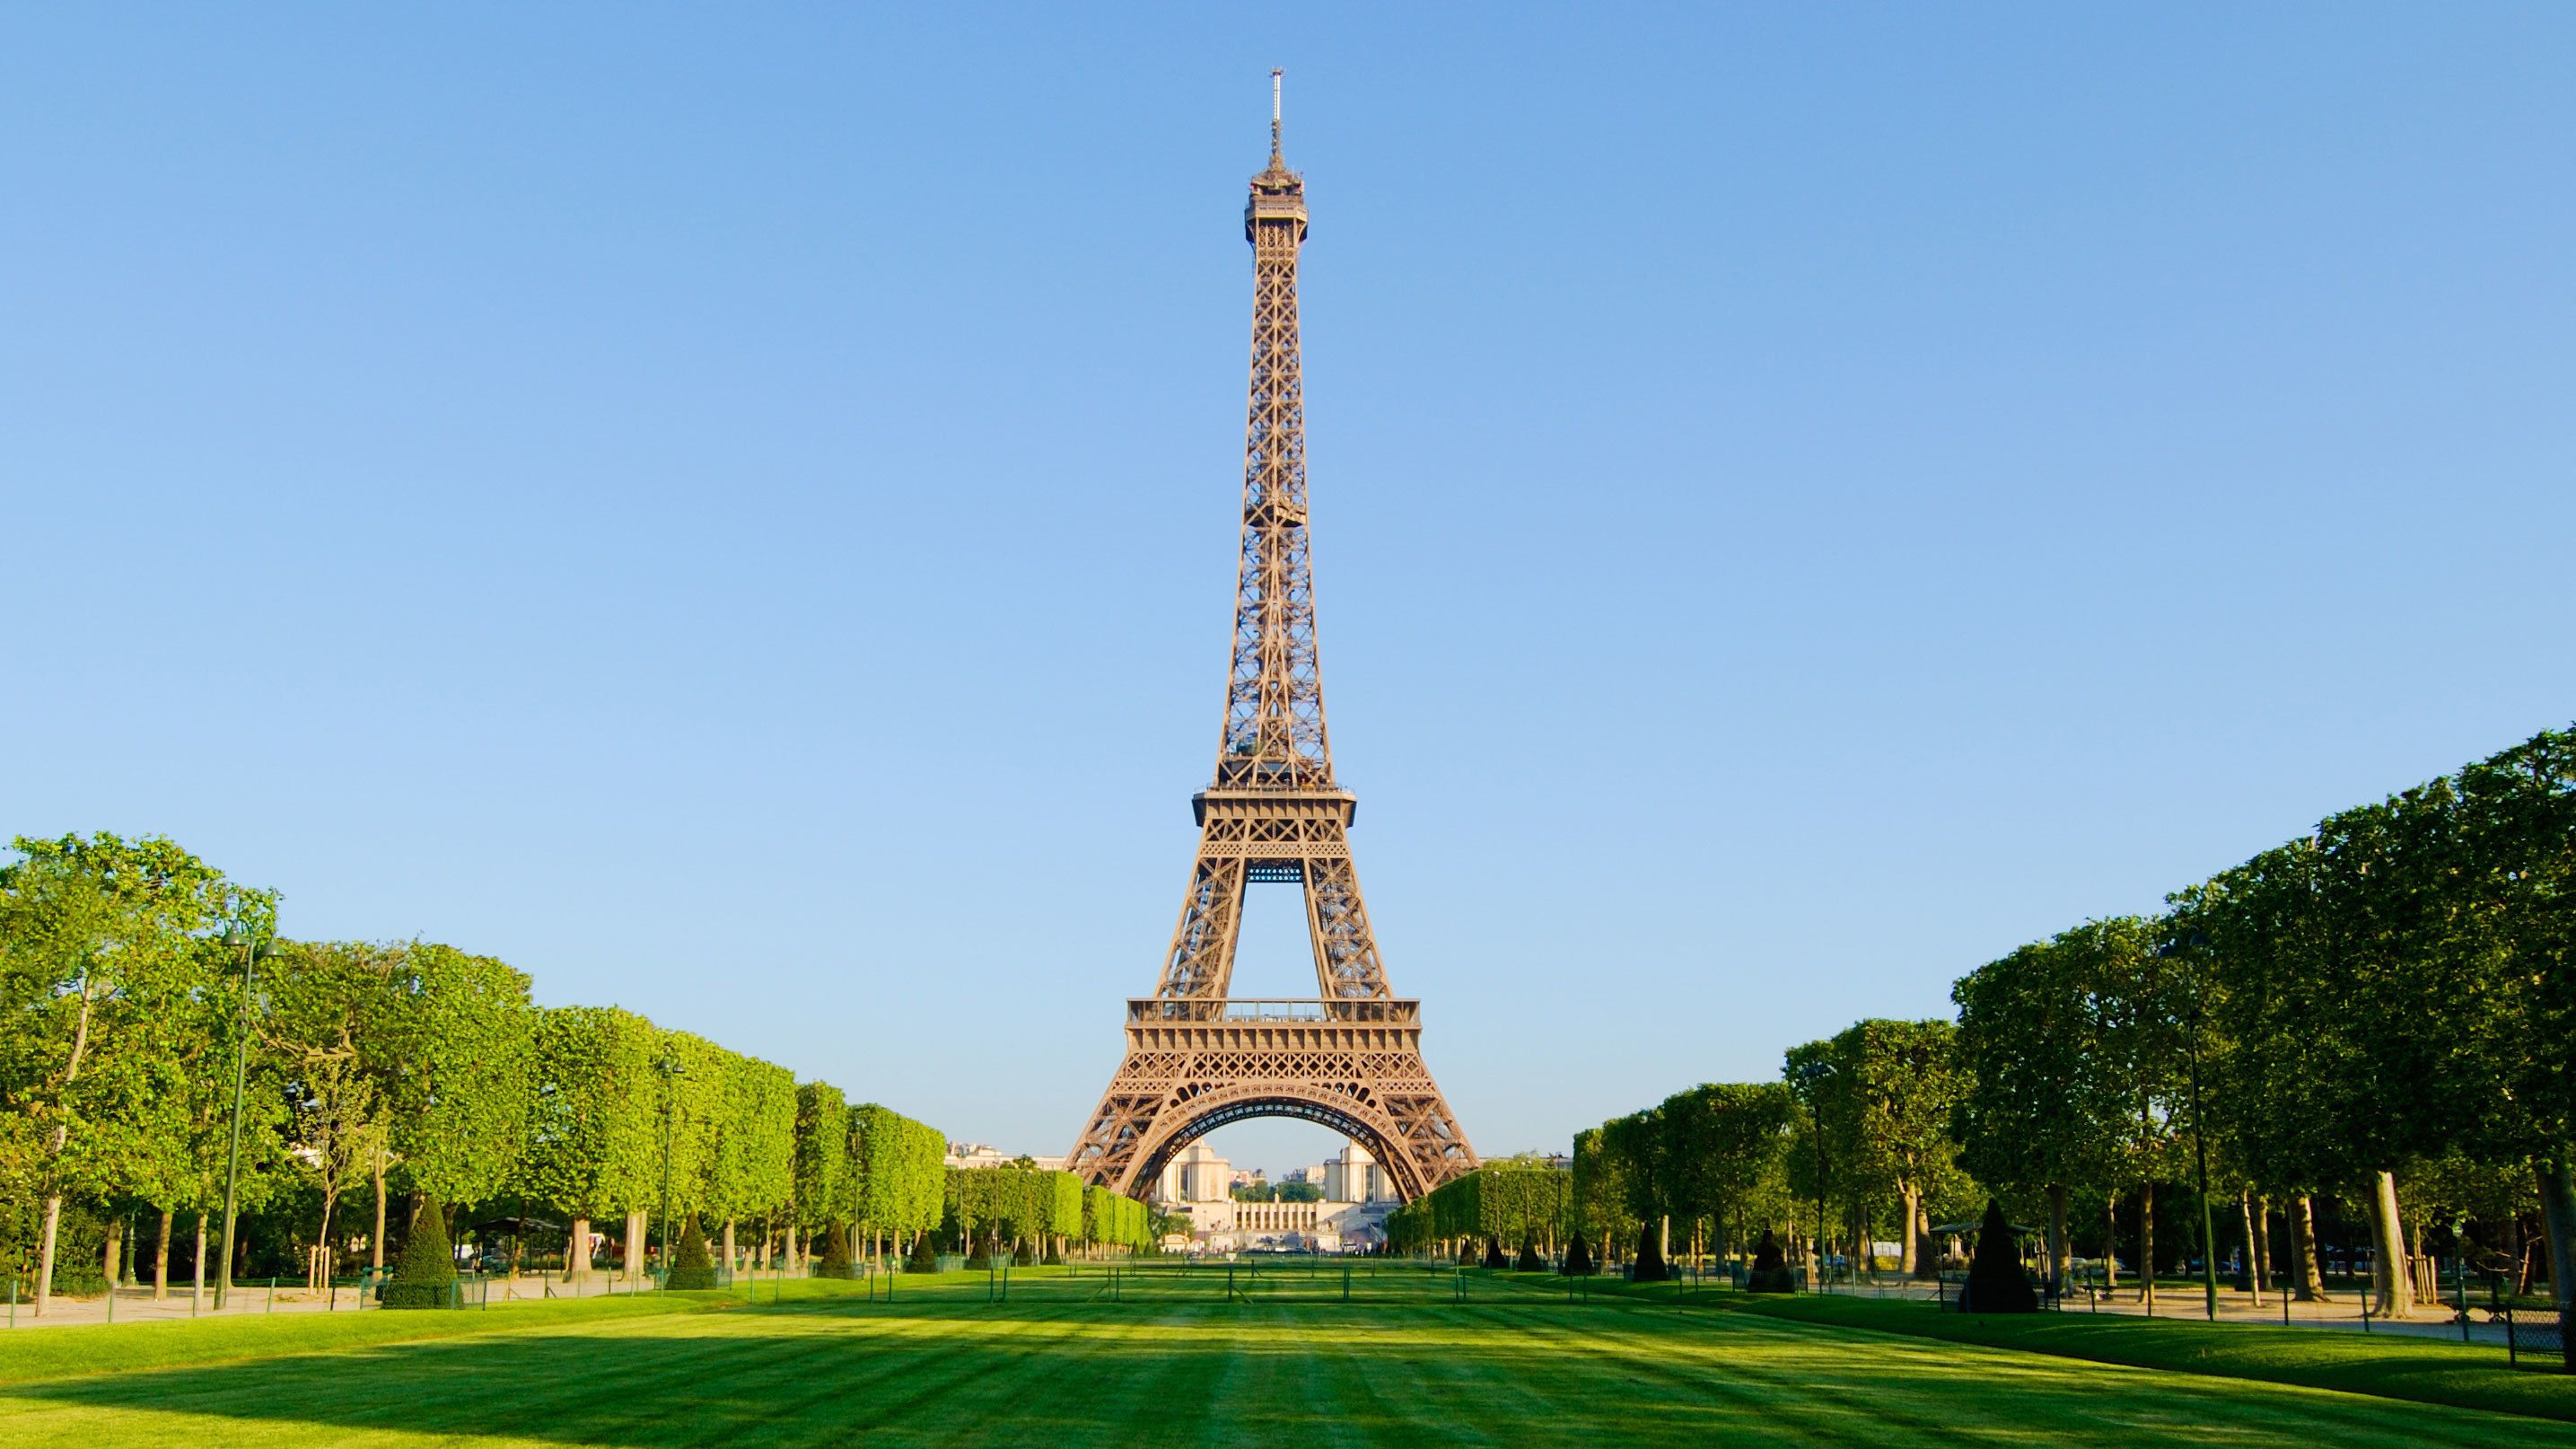 SkiptheLine Eiffel Tower Tickets with Summit Access